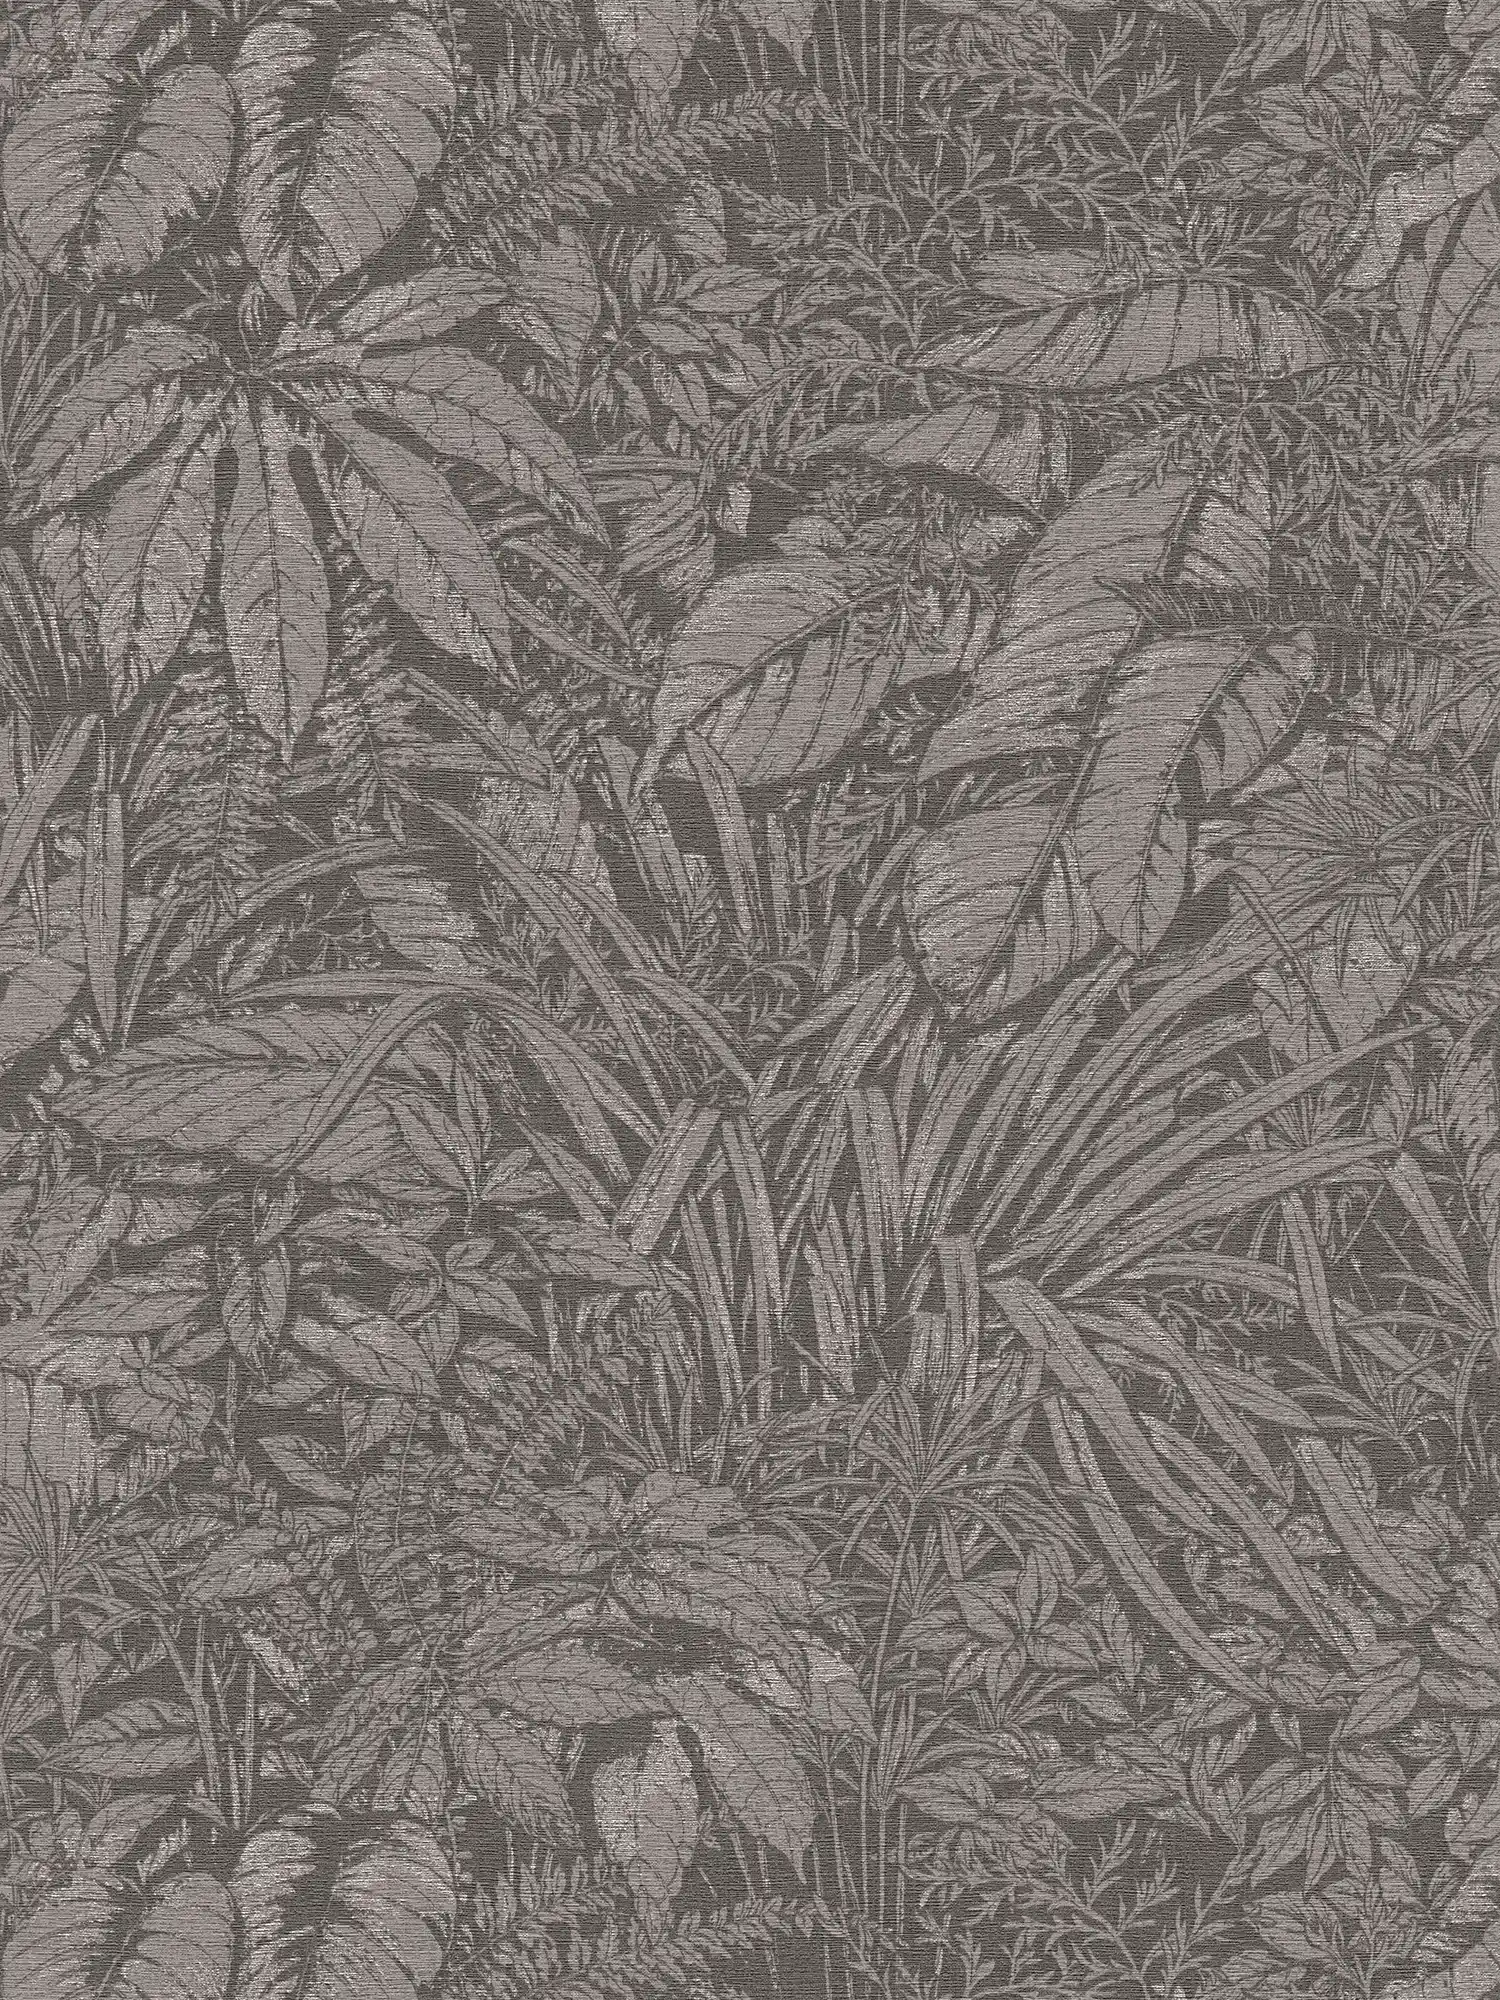 Vliestapete mit floralem Blatt Muster – Grau, Schwarz, Silber
